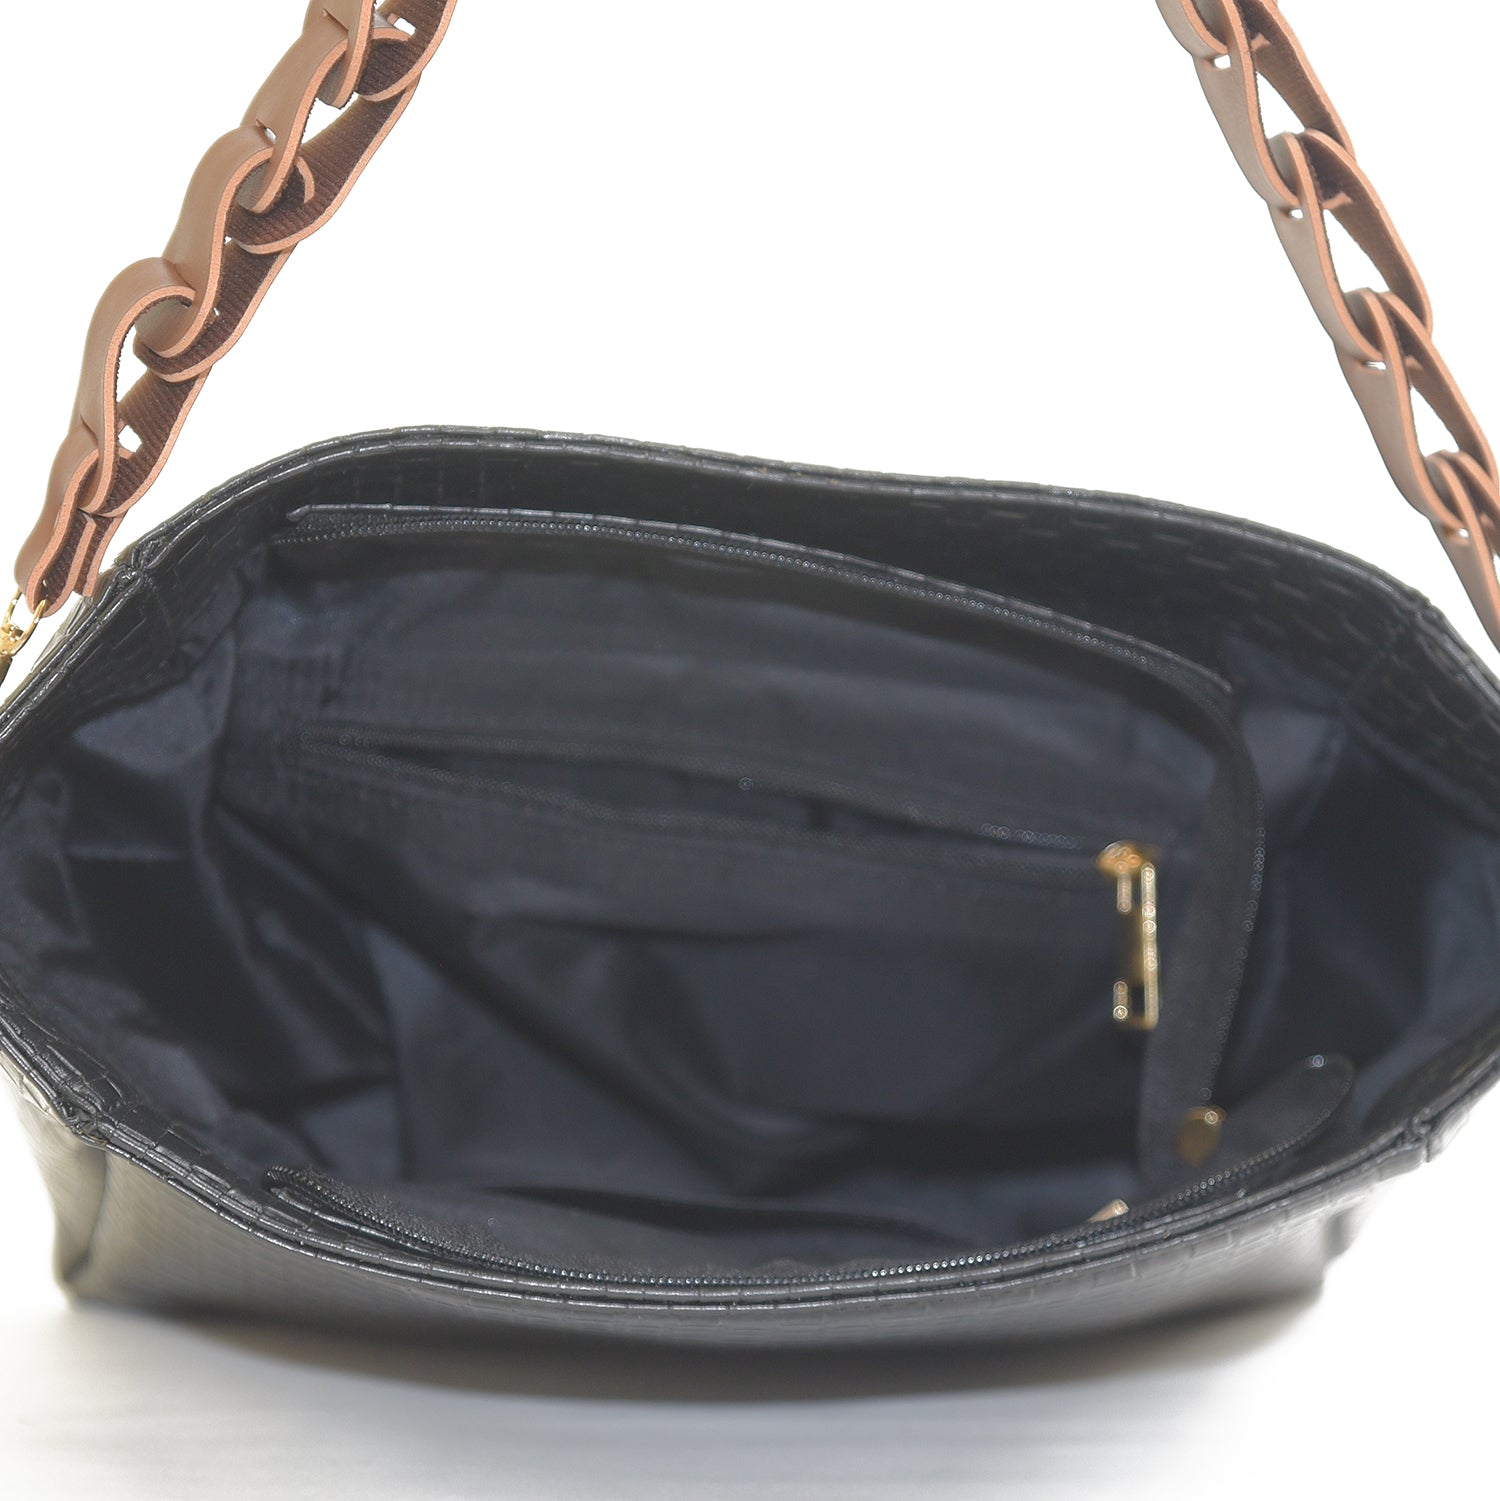 Zurich handbag black